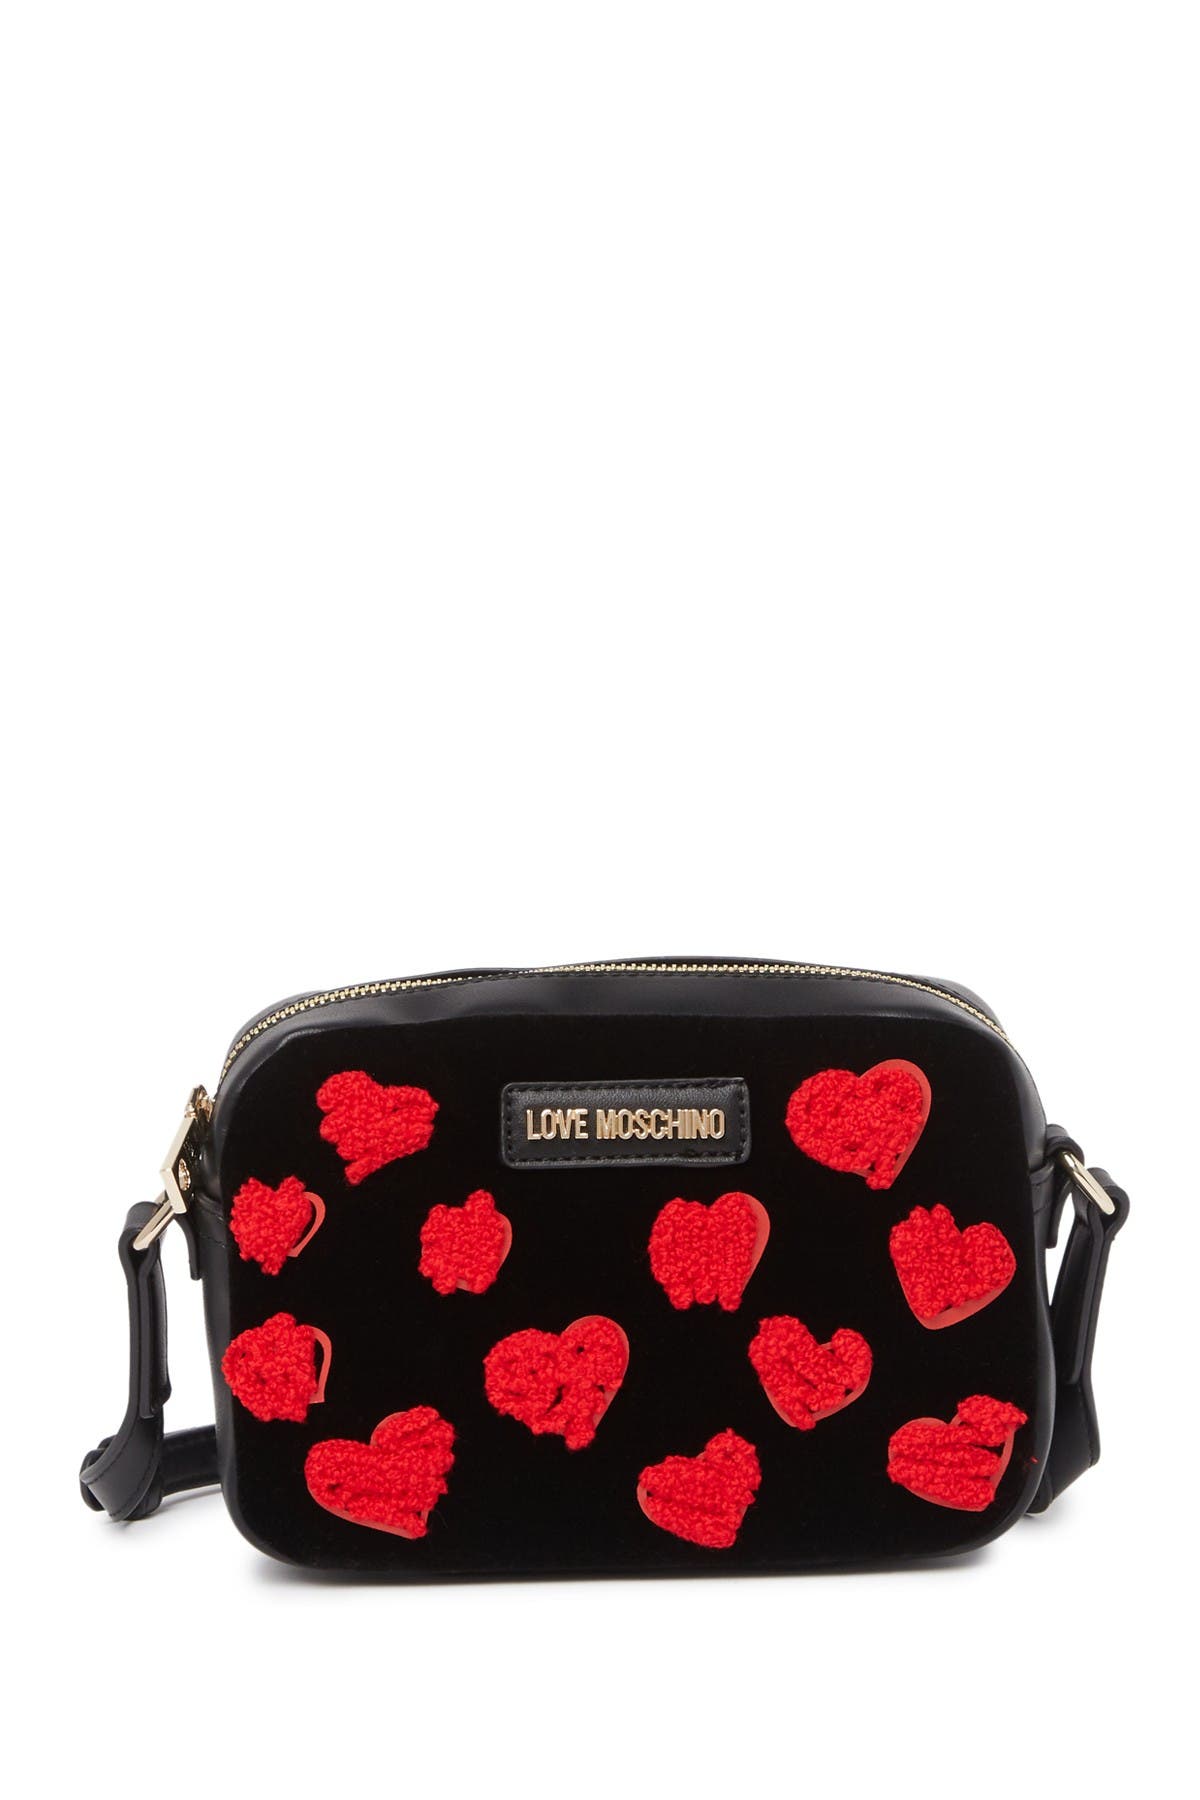 love moschino purse